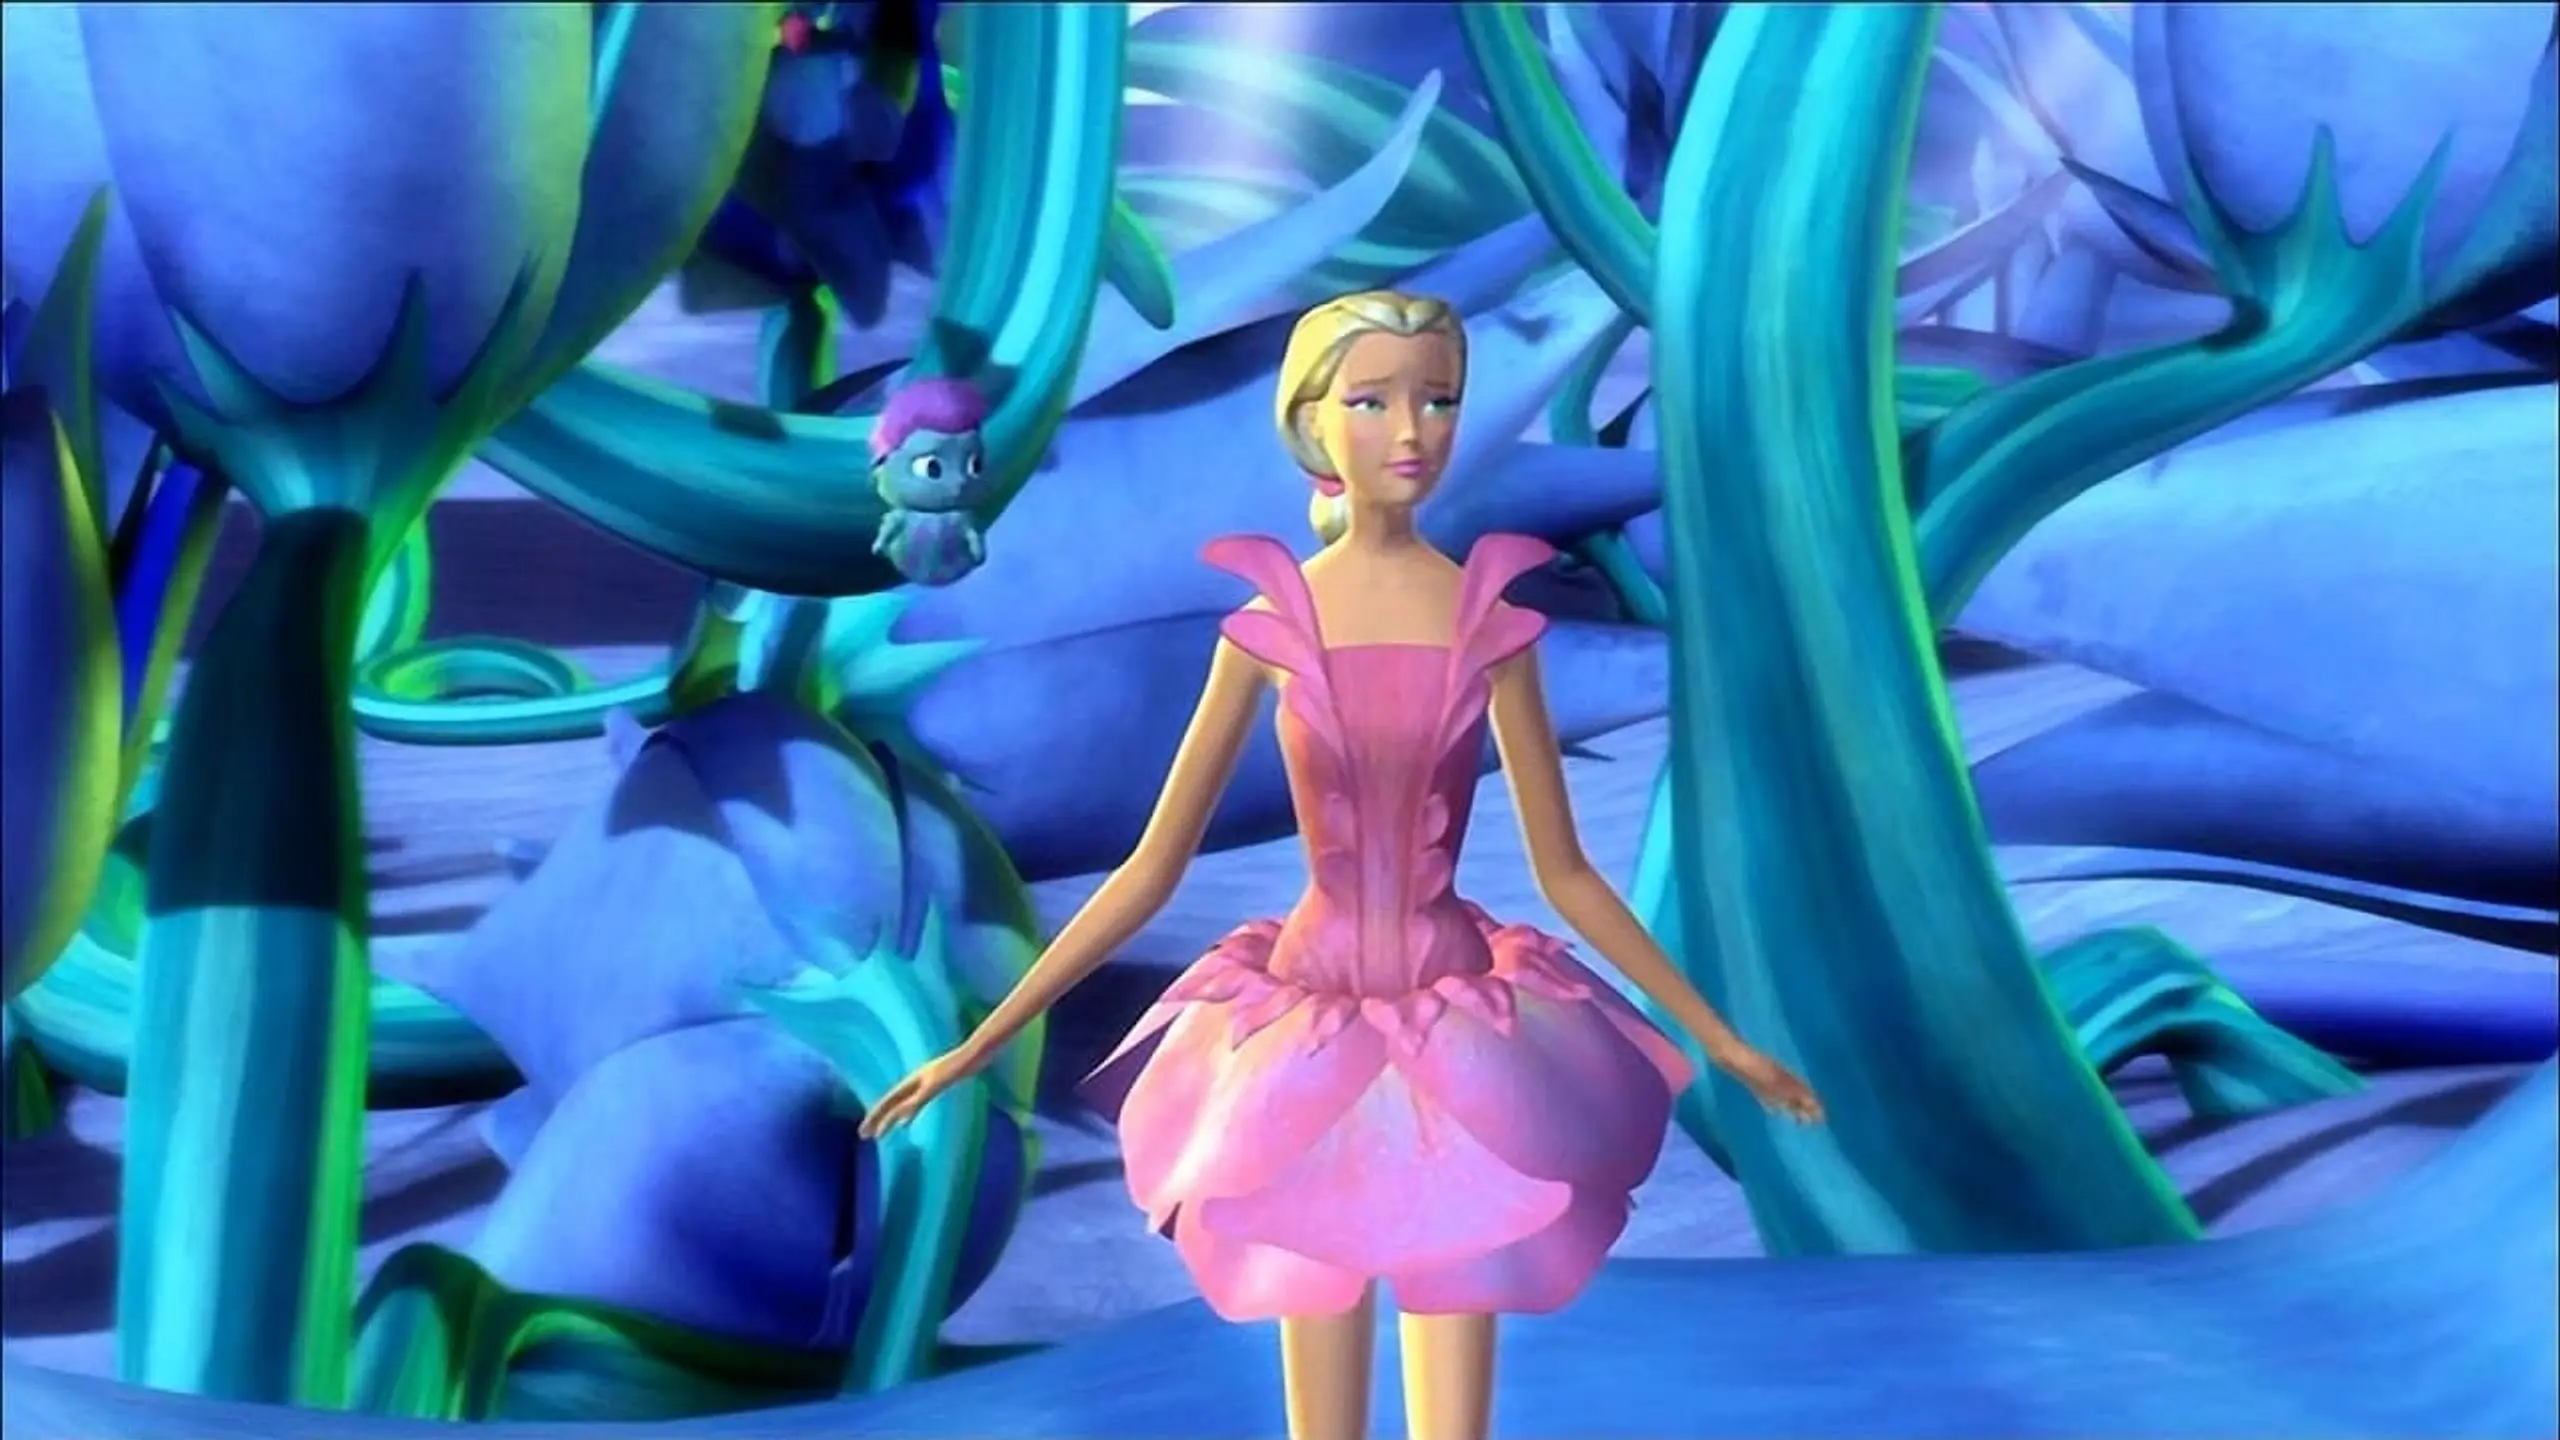 Barbie - Fairytopia